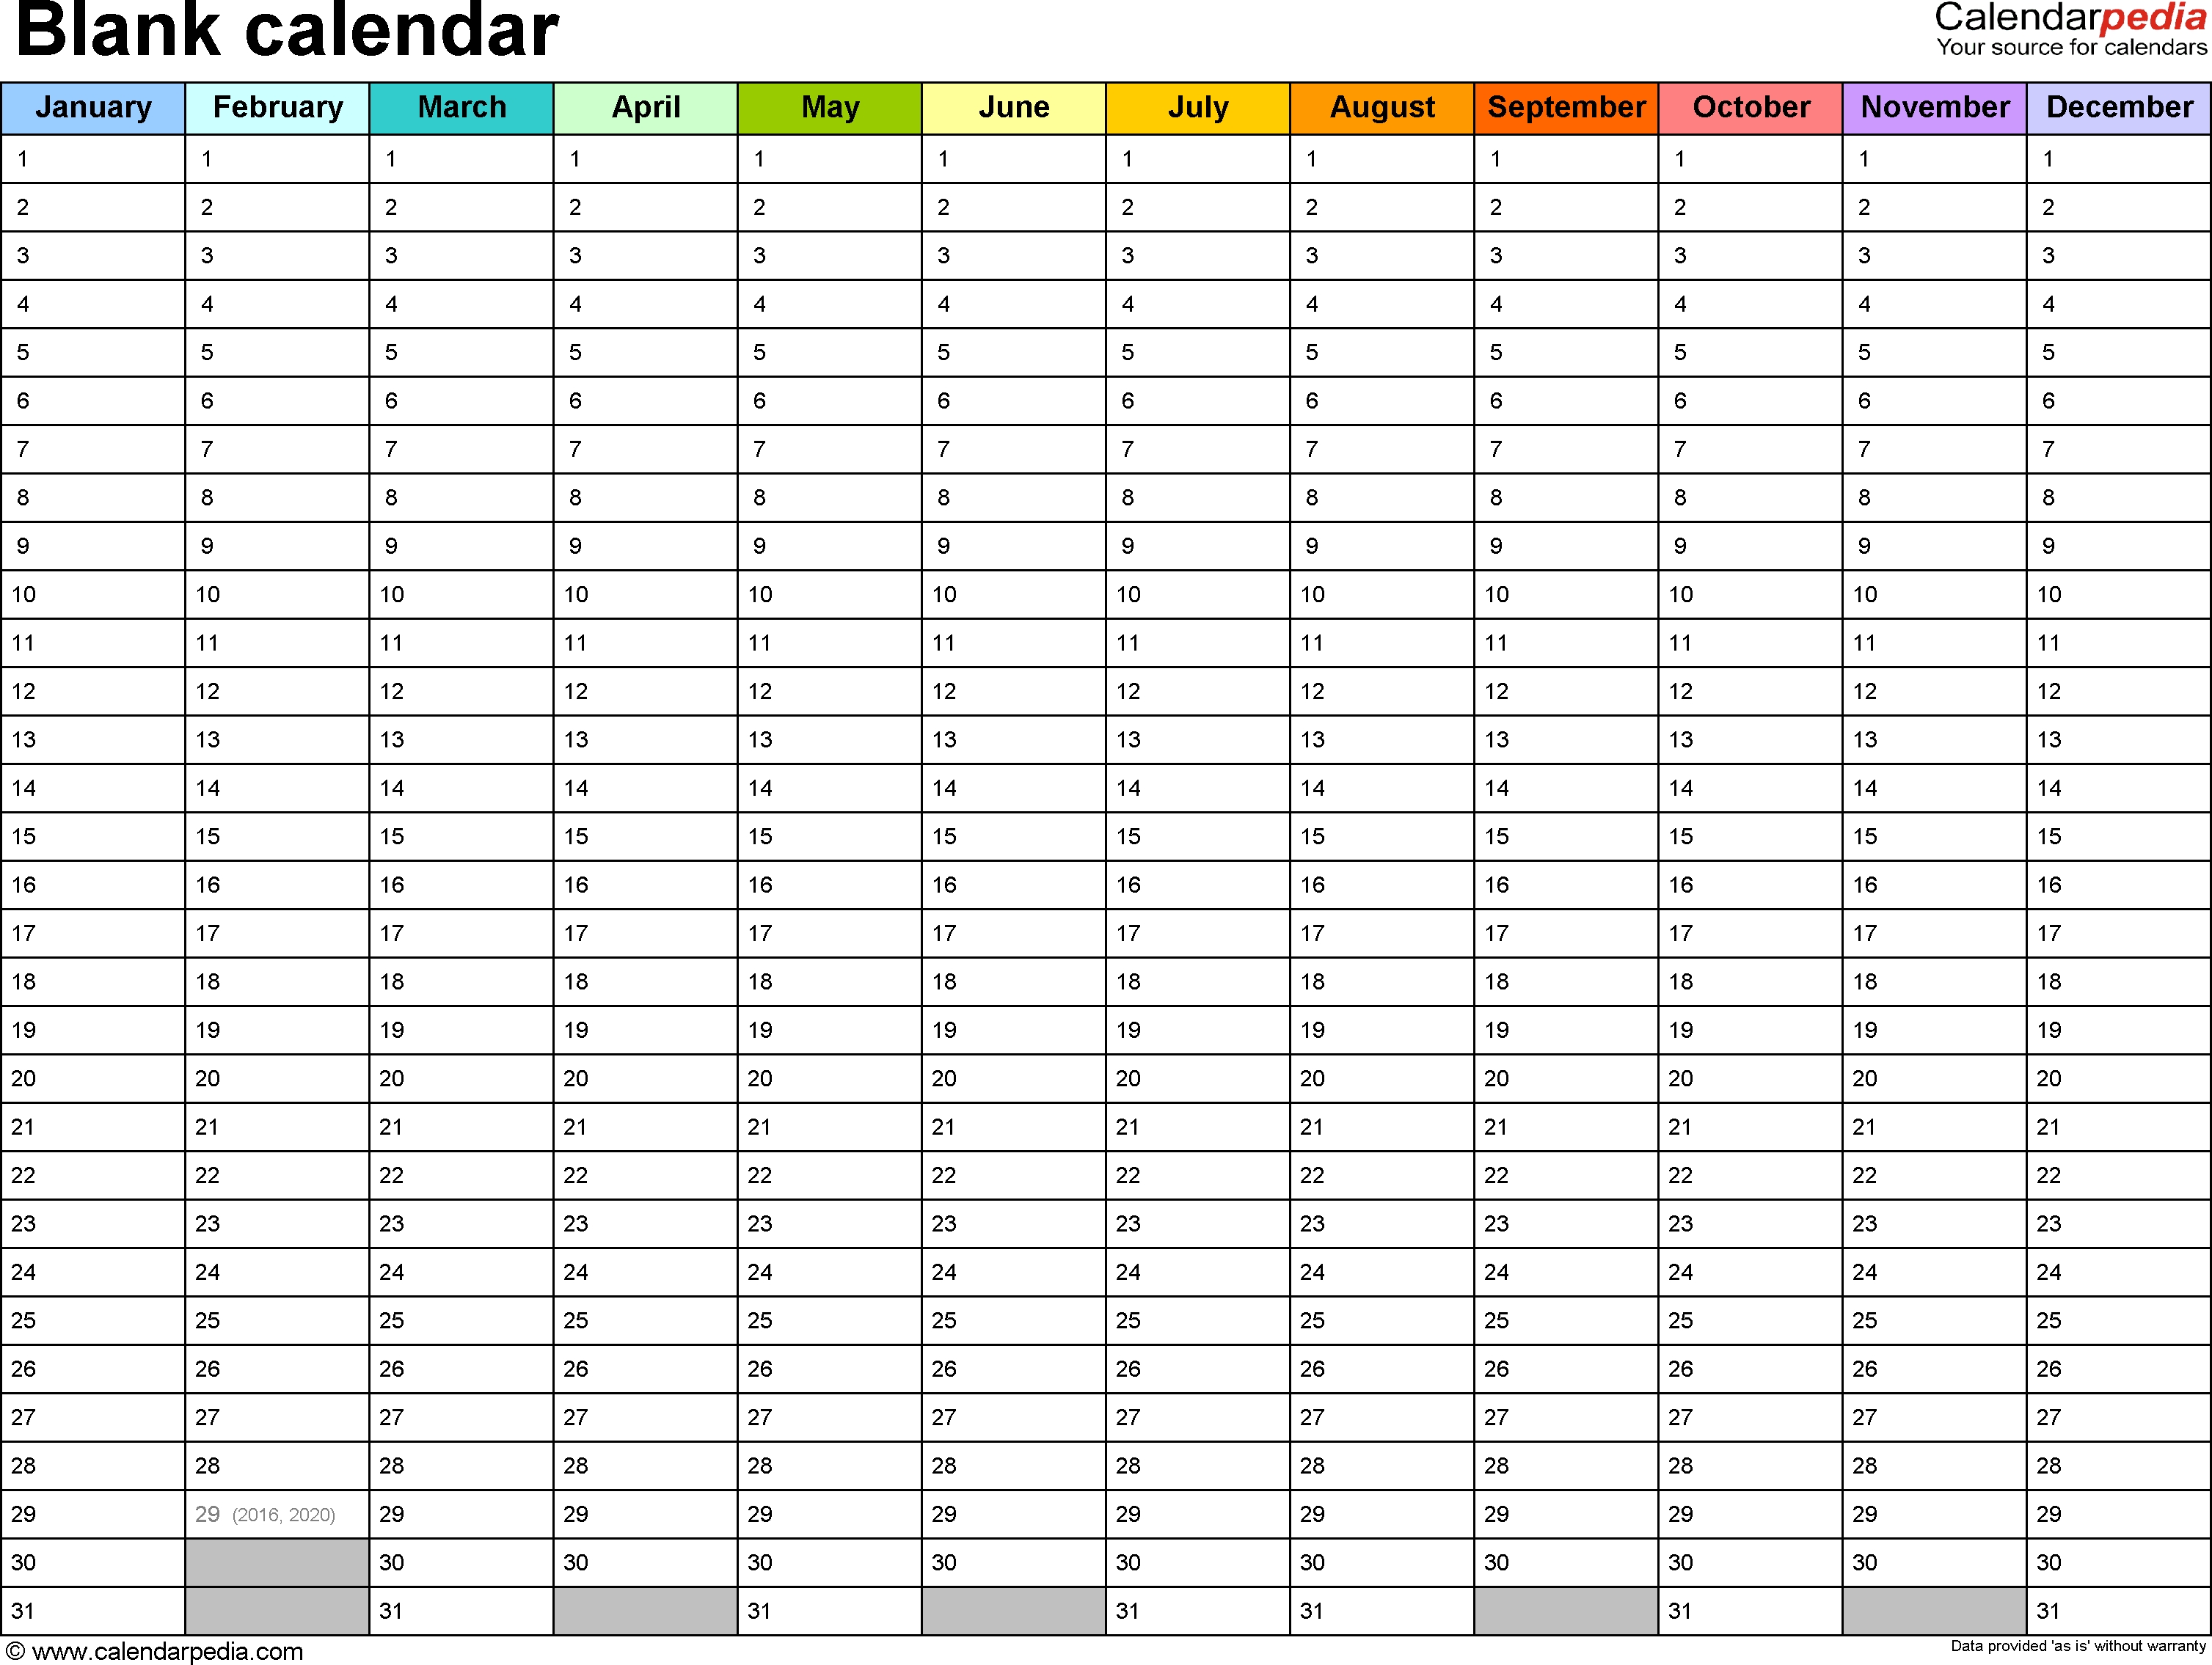 Blank Calendar - 9 Free Printable Microsoft Word Templates regarding Year At A Glance Calendars Printable